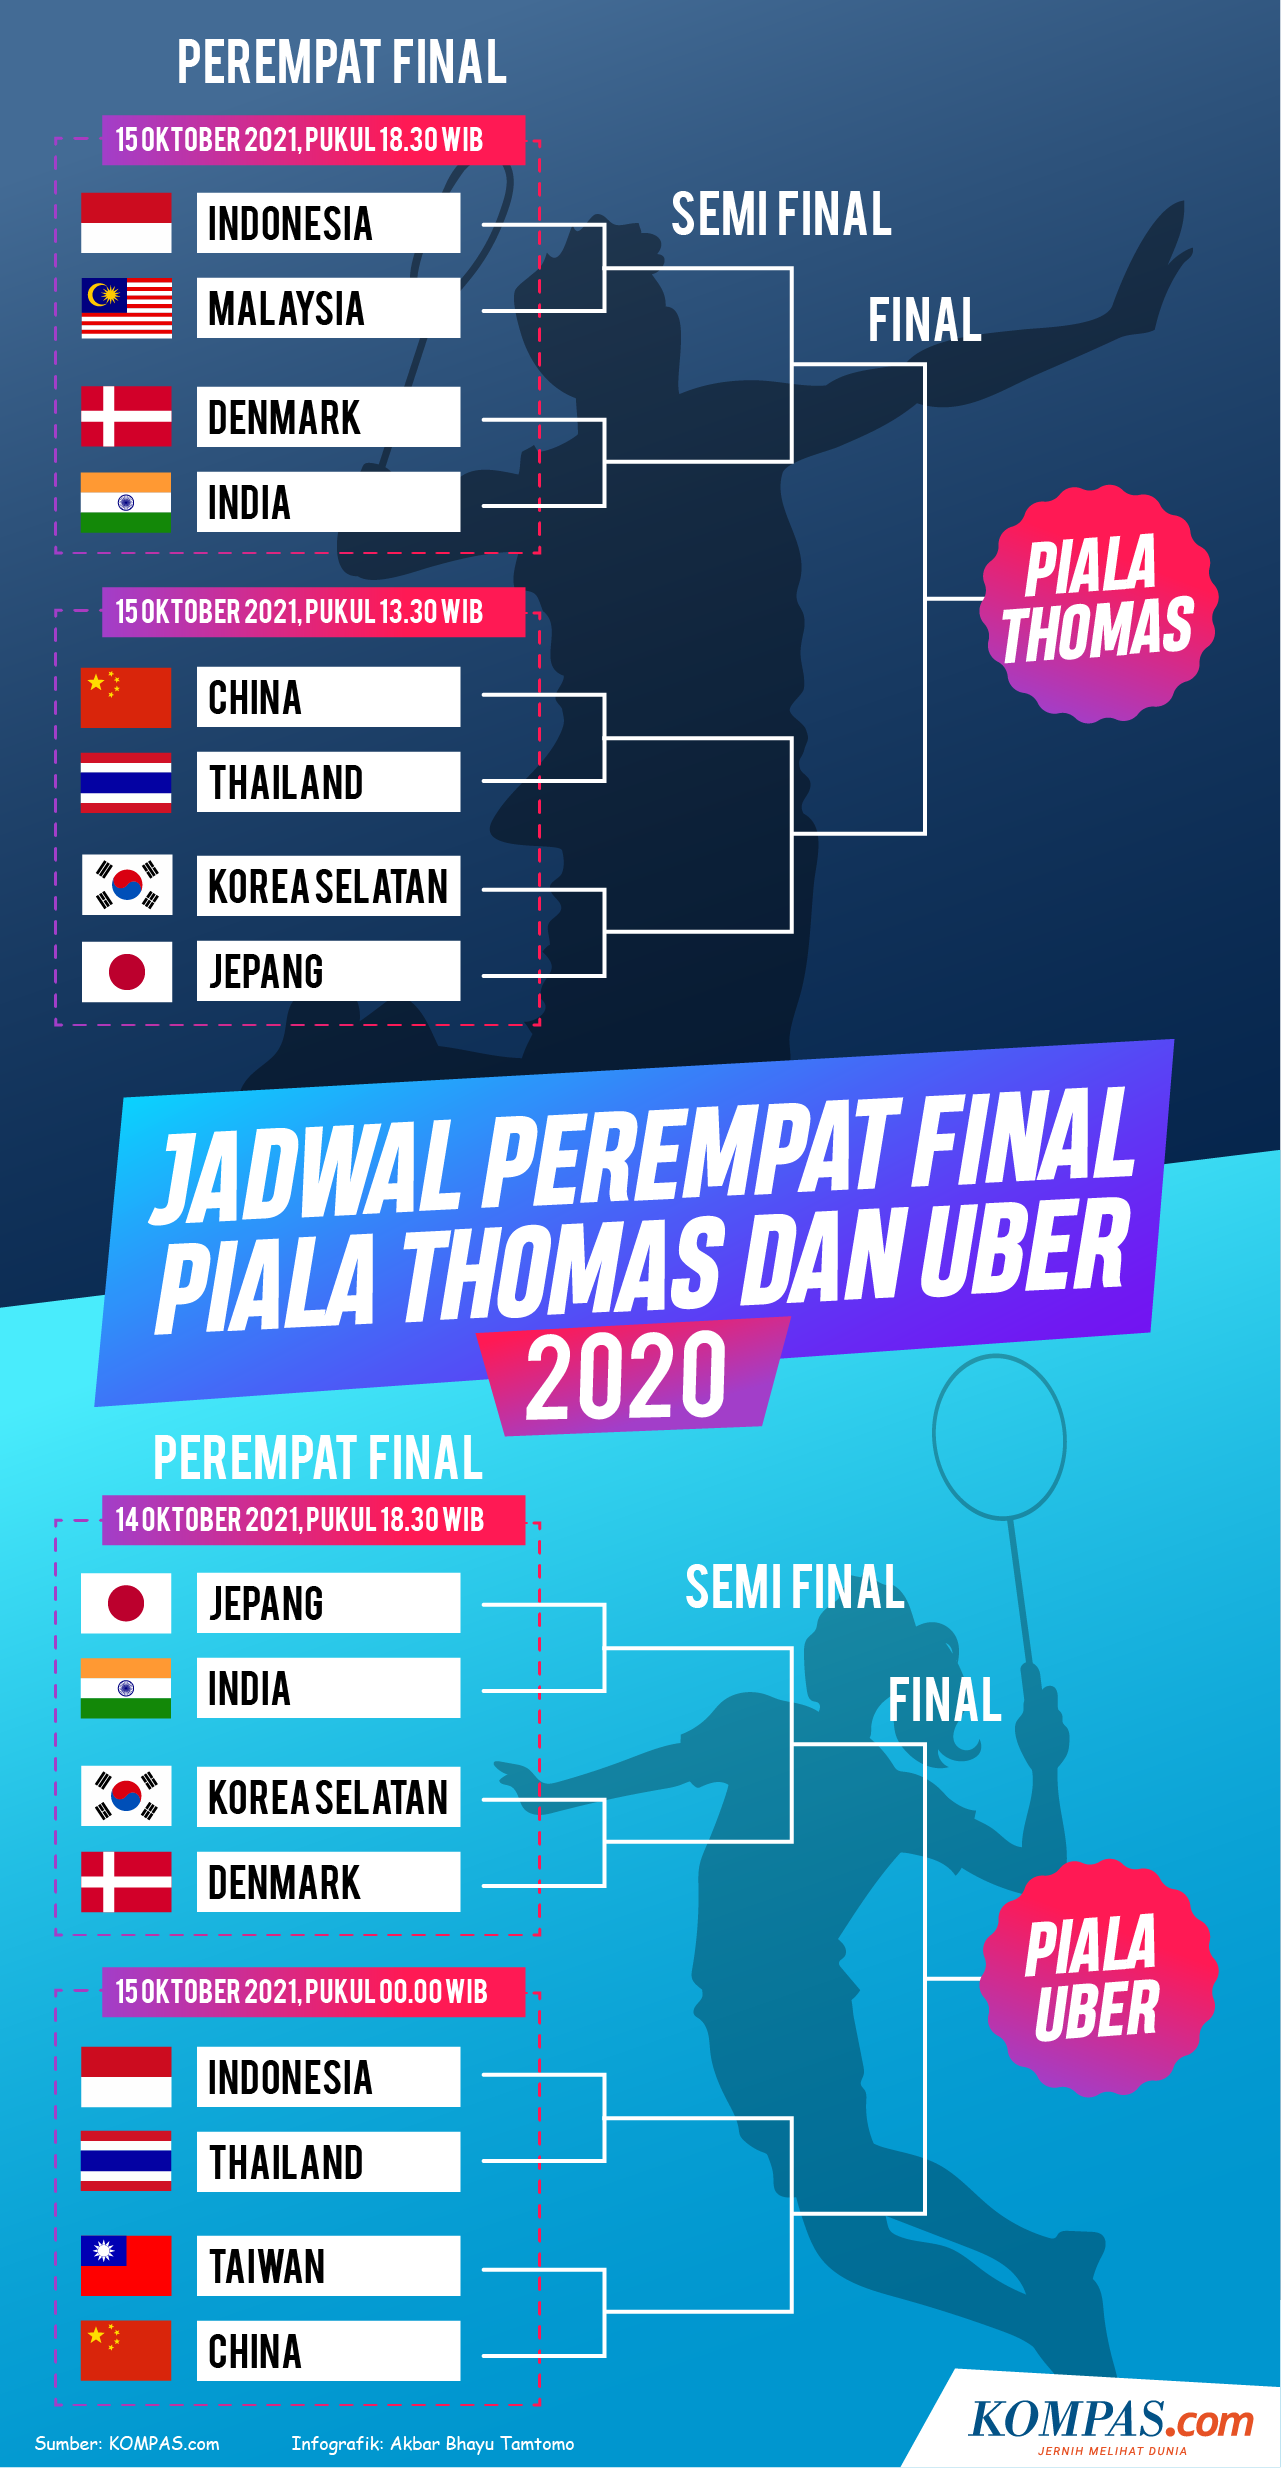 Jadwal Perempat Final Thomas Cup 2020 Indonesia Vs Malaysia, Ini Link Streaming-nya! Halaman all